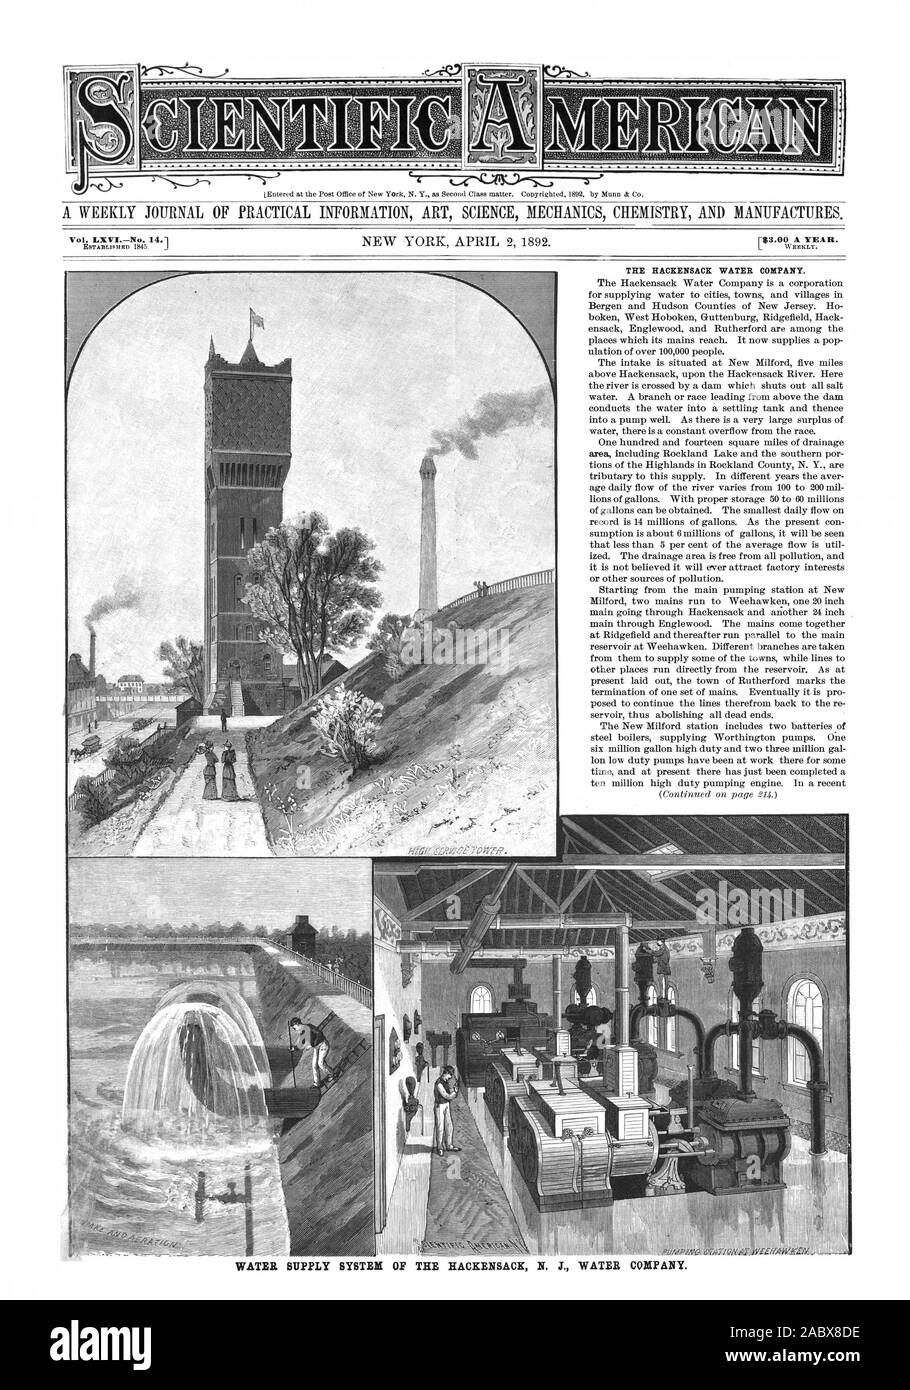 WEEKLY. Vol. LXVINo. 14.1 THE HACKENSACK WATER COMPANY. WATER SUPPLY SYSTEM OF THE HACKENSACK N. J WATER COMPANY., scientific american, 1892-04-02 Stock Photo